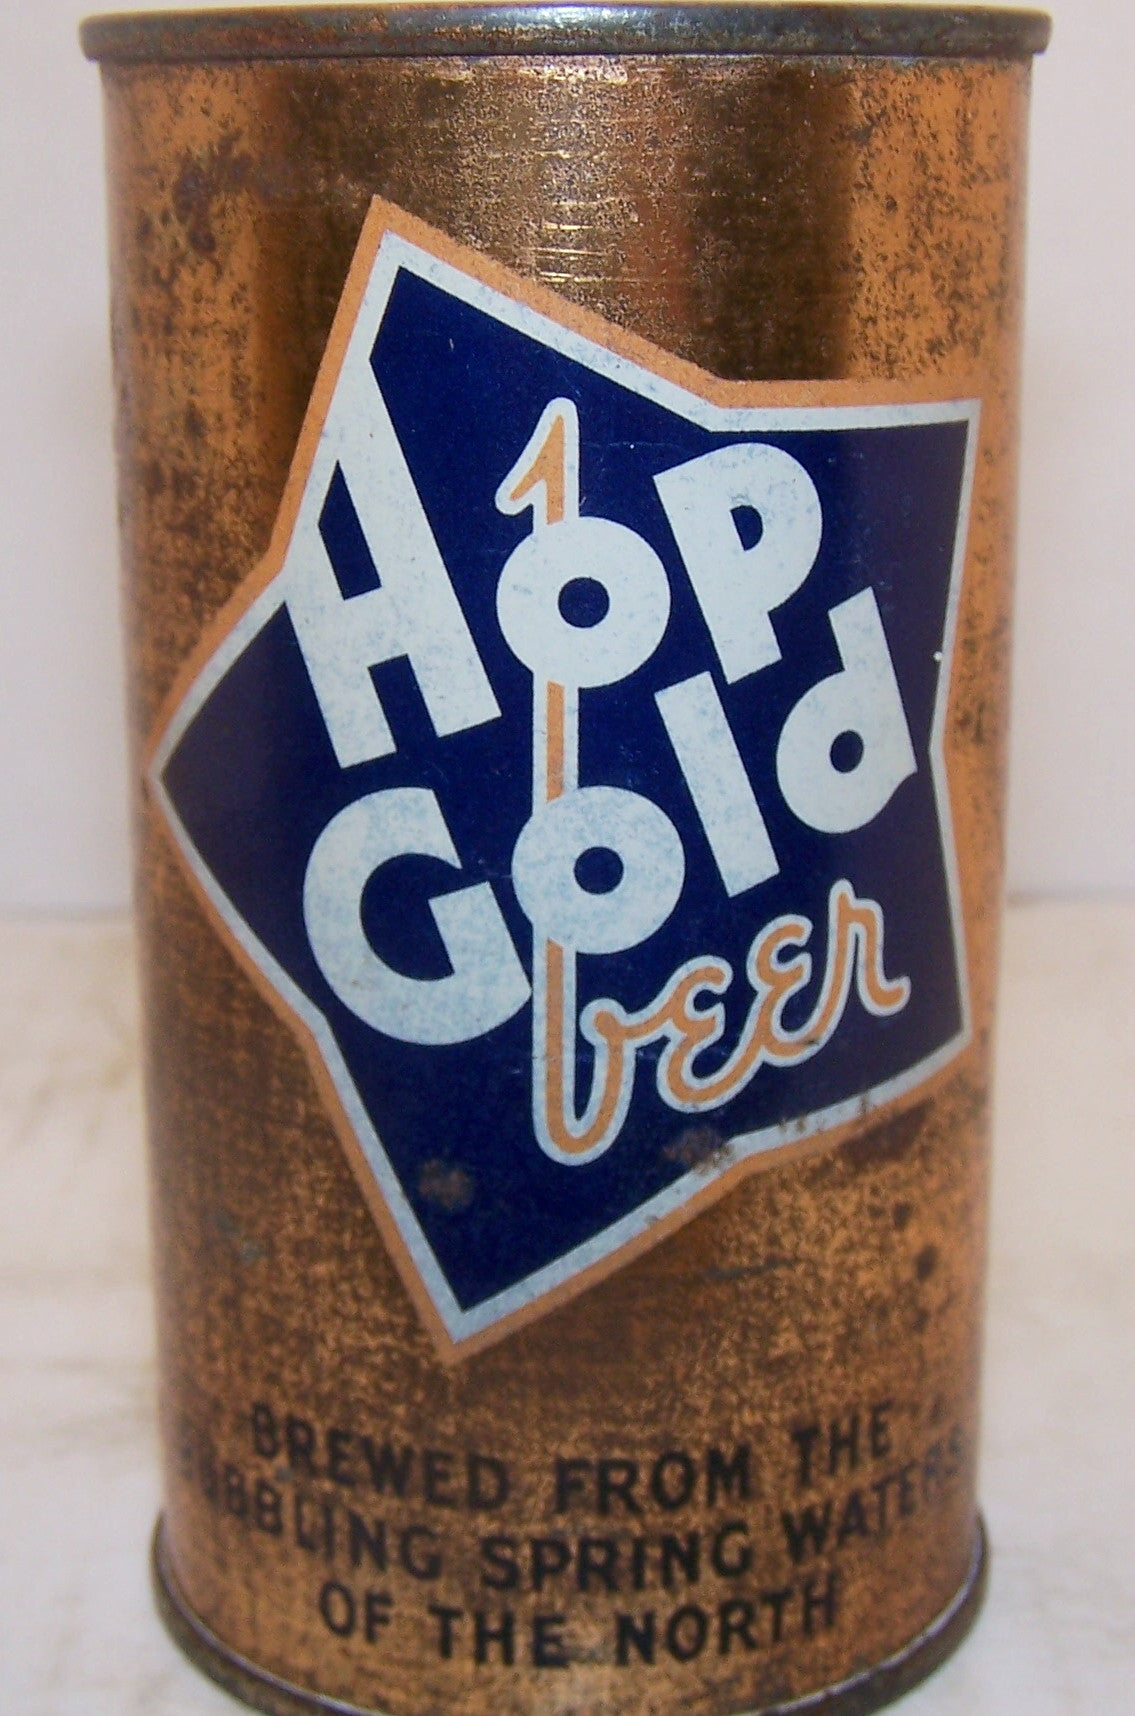 Hop Gold Beer (Big Star) Lilek page # 403, Grade 2+ Sold on 9/5/15